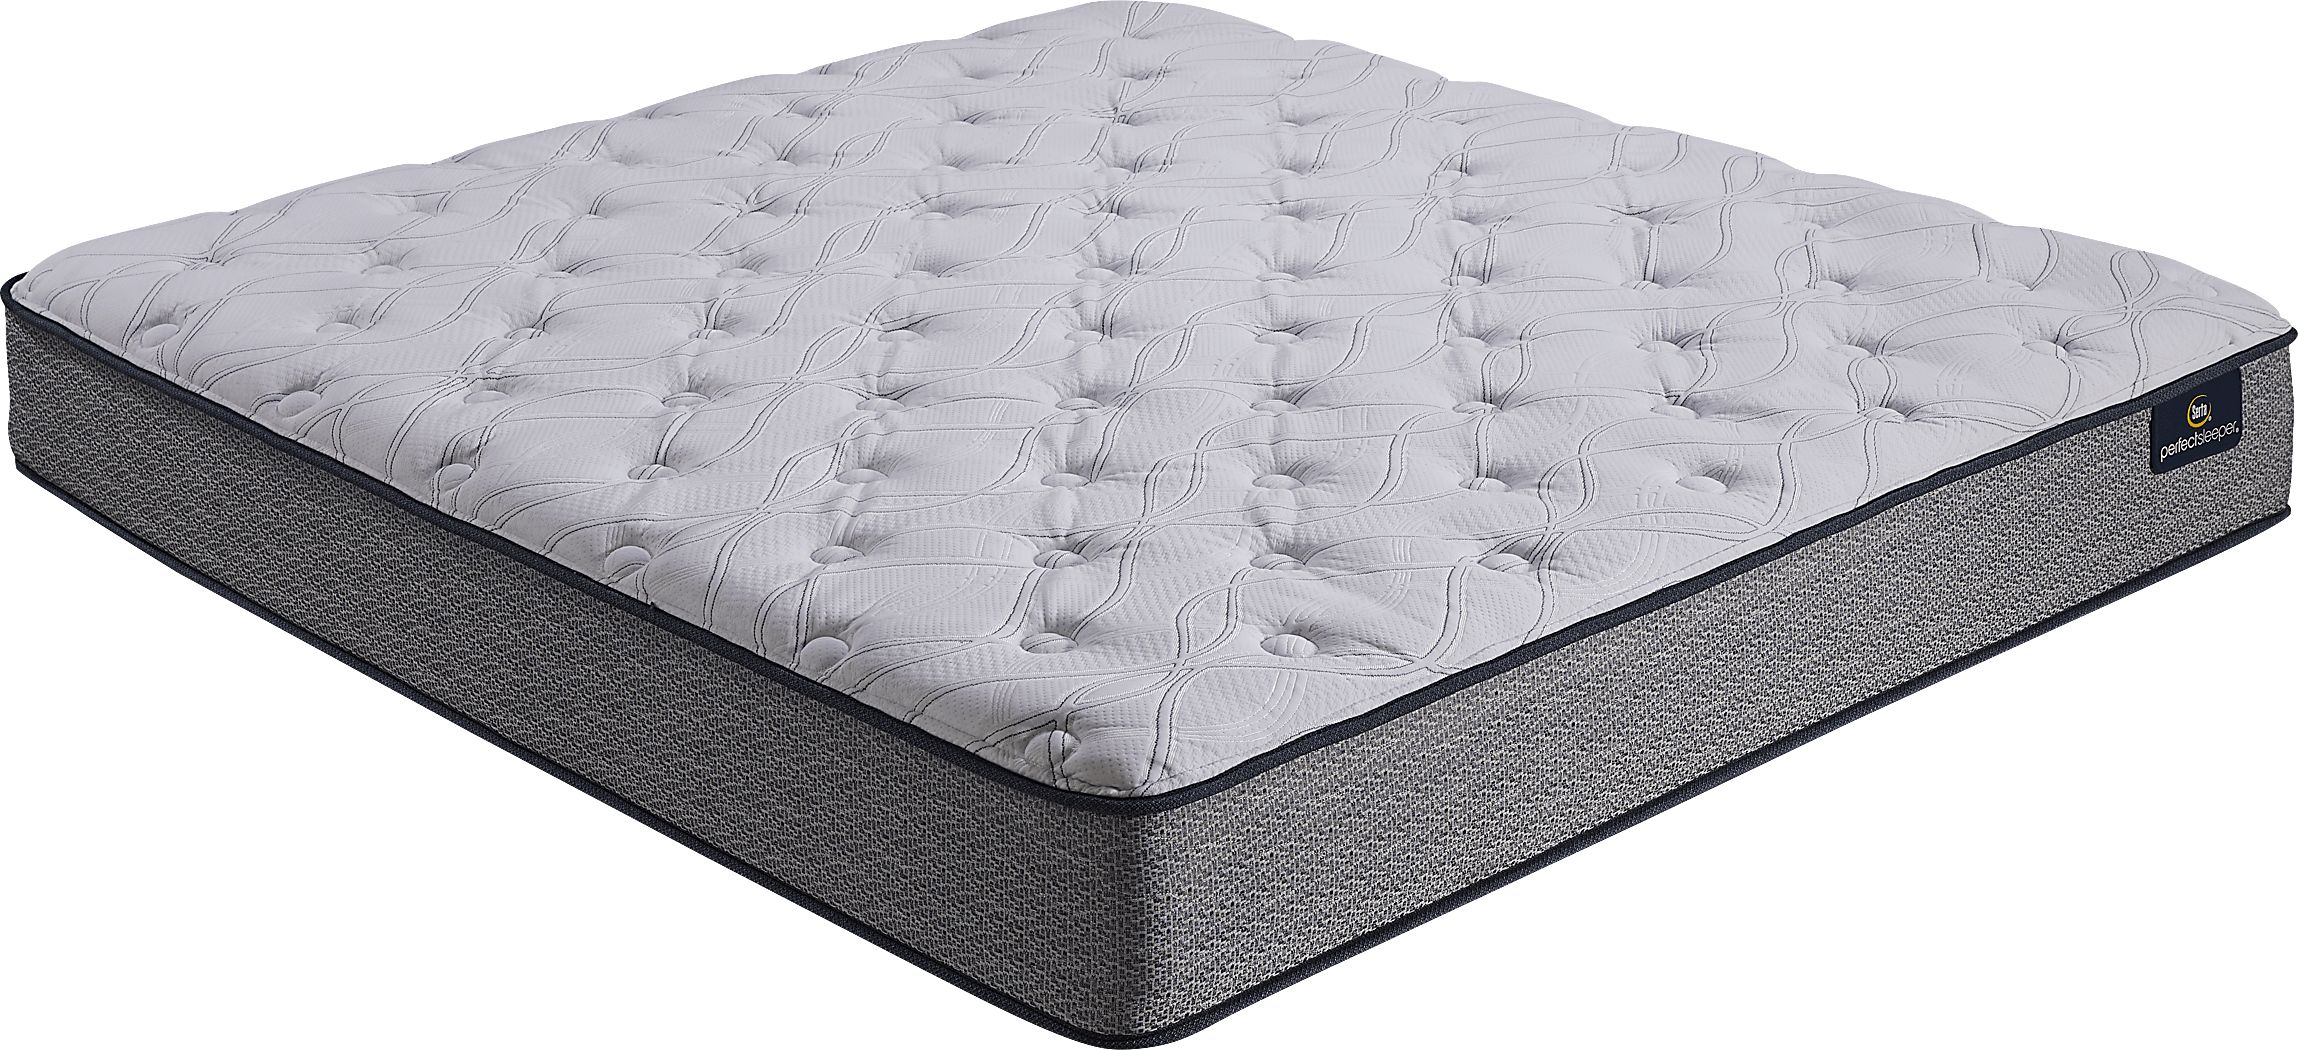 serta perfect sleeper pine meadow king mattress reviews